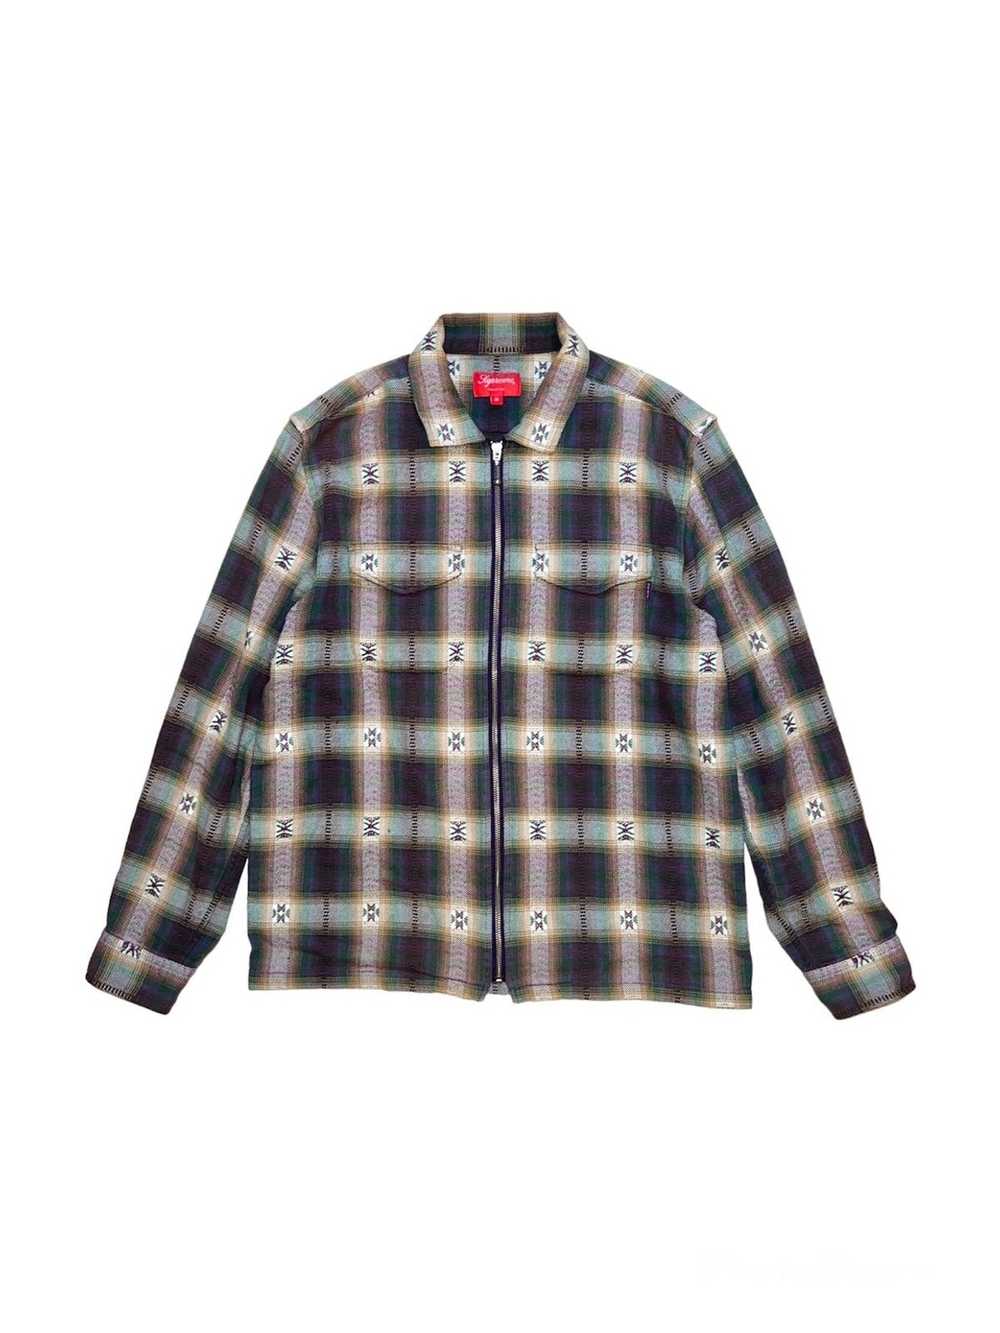 Supreme Supreme Plaid Flannel Zip Up Shirt - image 1